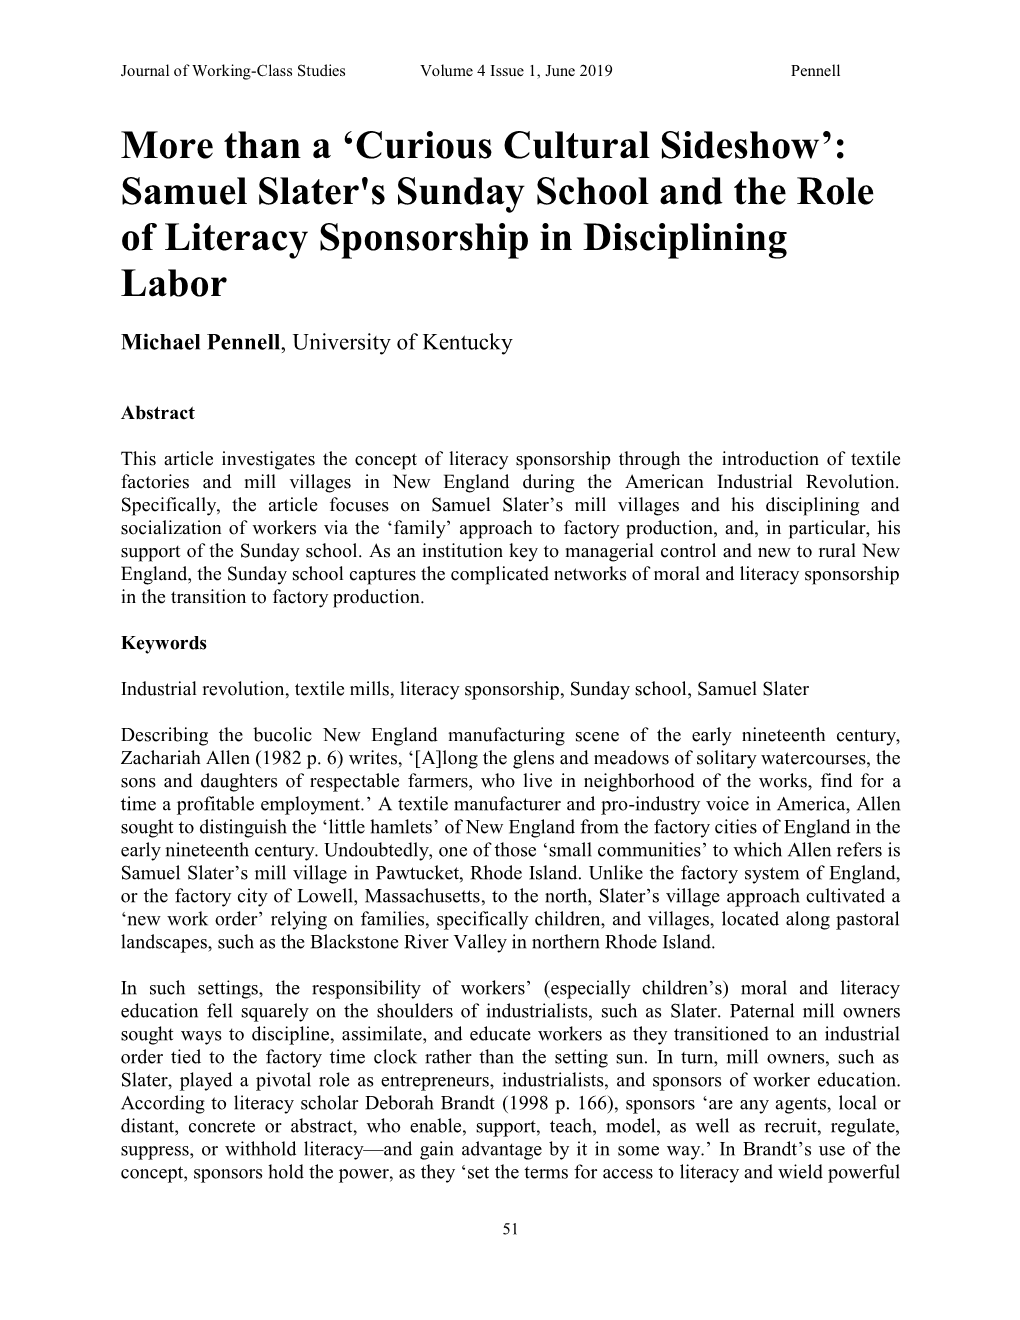 Samuel Slater's Sunday School and the American Industrial Revolution